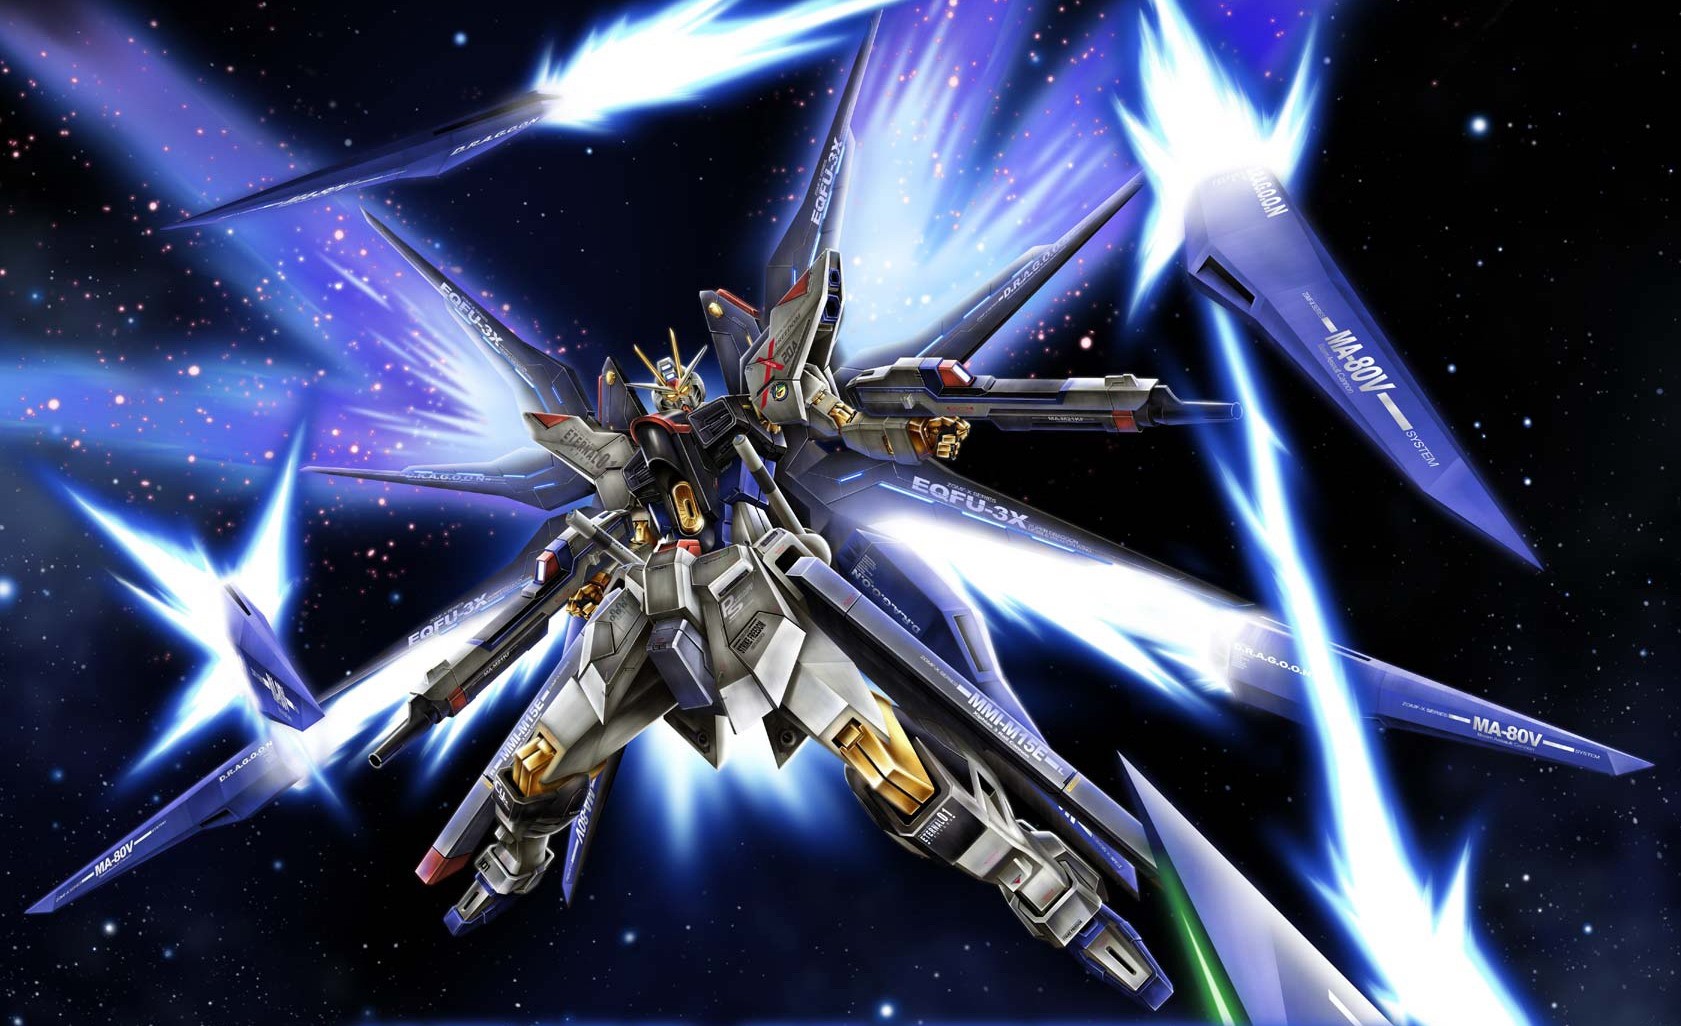 Anime Mobile Suit Gundam Seed Gundam Wallpaper Resolution 1681x1026 Id Wallha Com